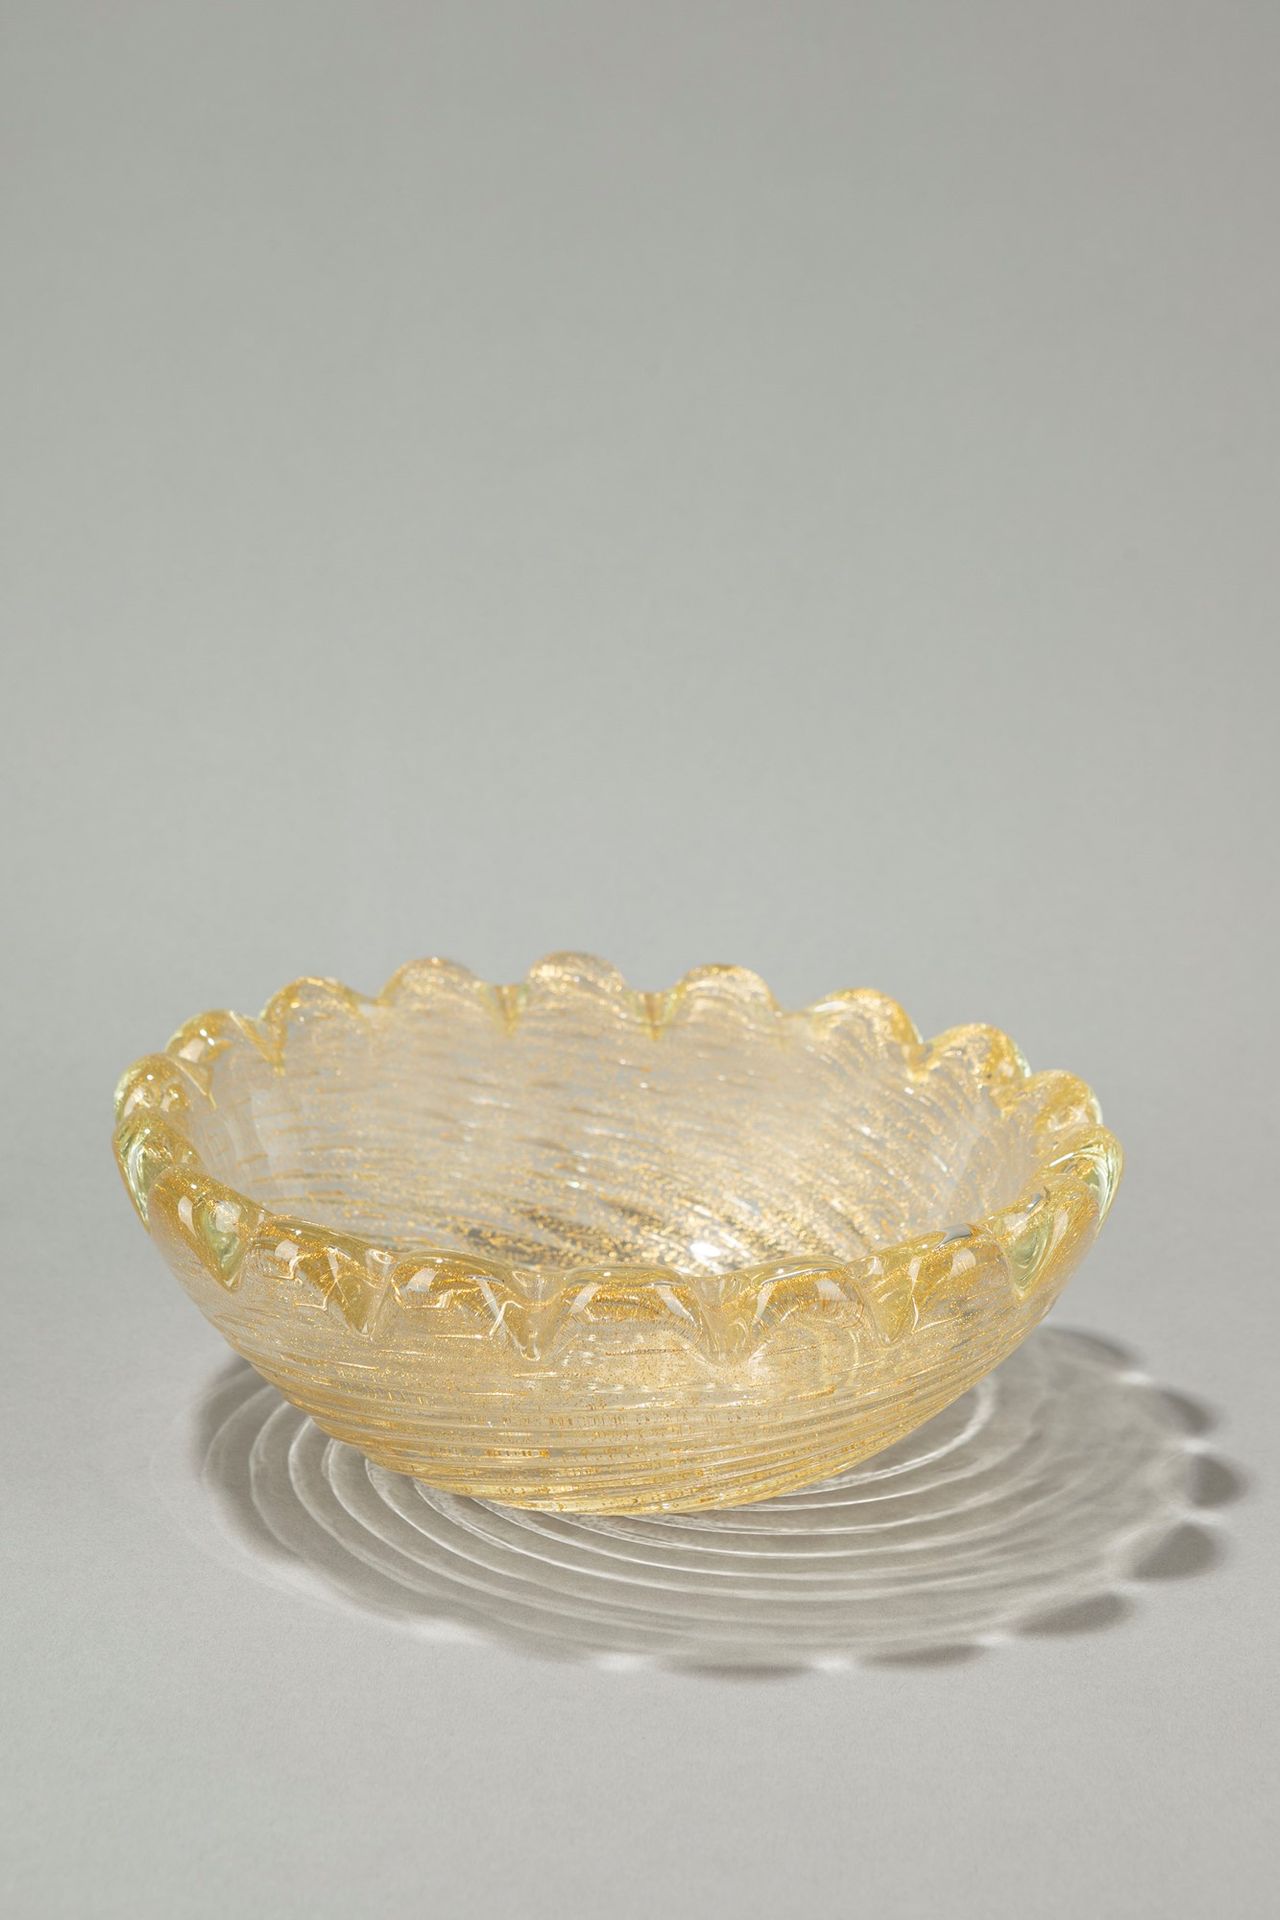 SEGUSO 碗，1950年，约

h 9 x diam 25 cm
玻璃与金色嵌件